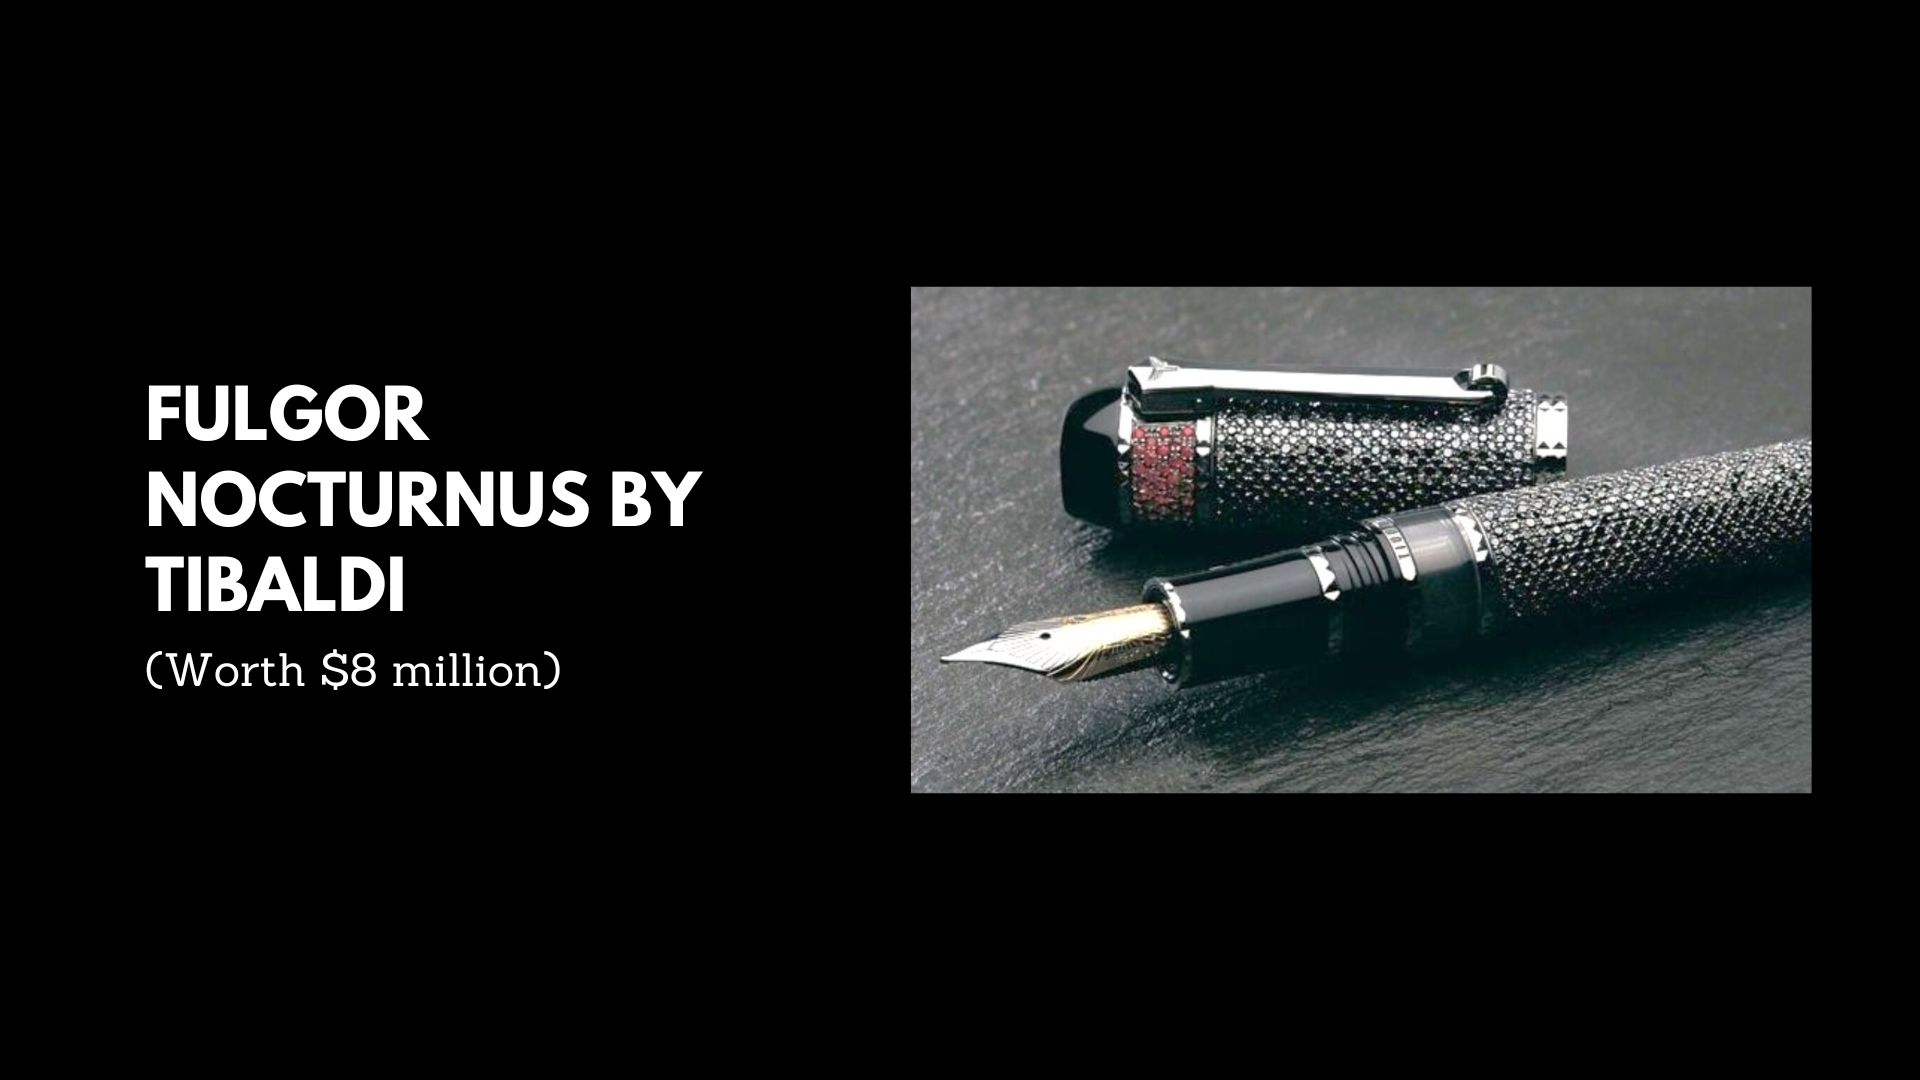 Fulgor Nocturnus by Tibaldi - (Worth $8 million) Most expensive pens in history